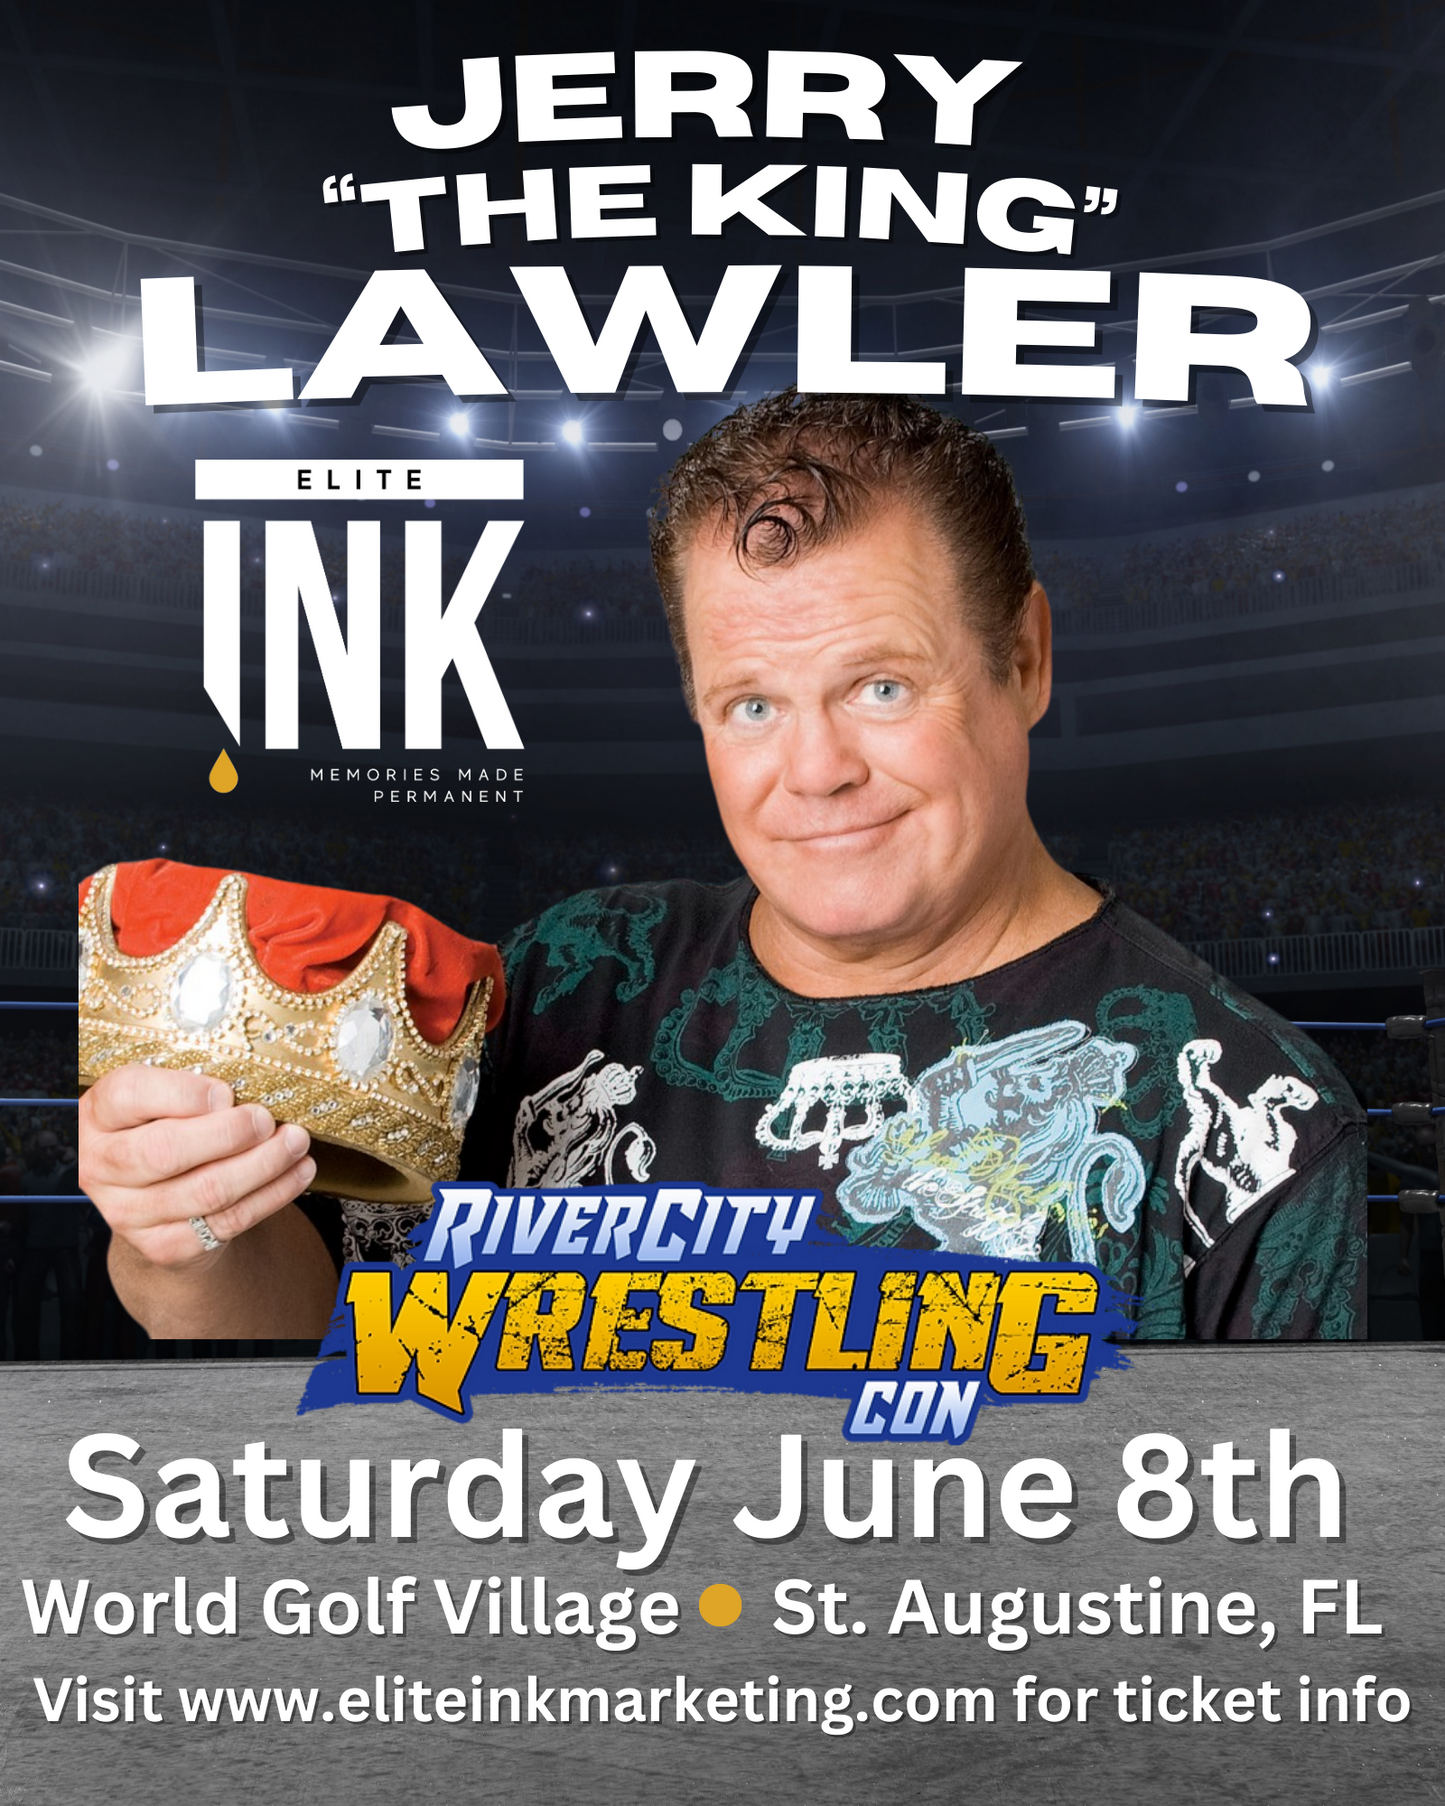 Jerry The King Lawler RiverCity WrestlingCon Saturday June 8th Pre-Order